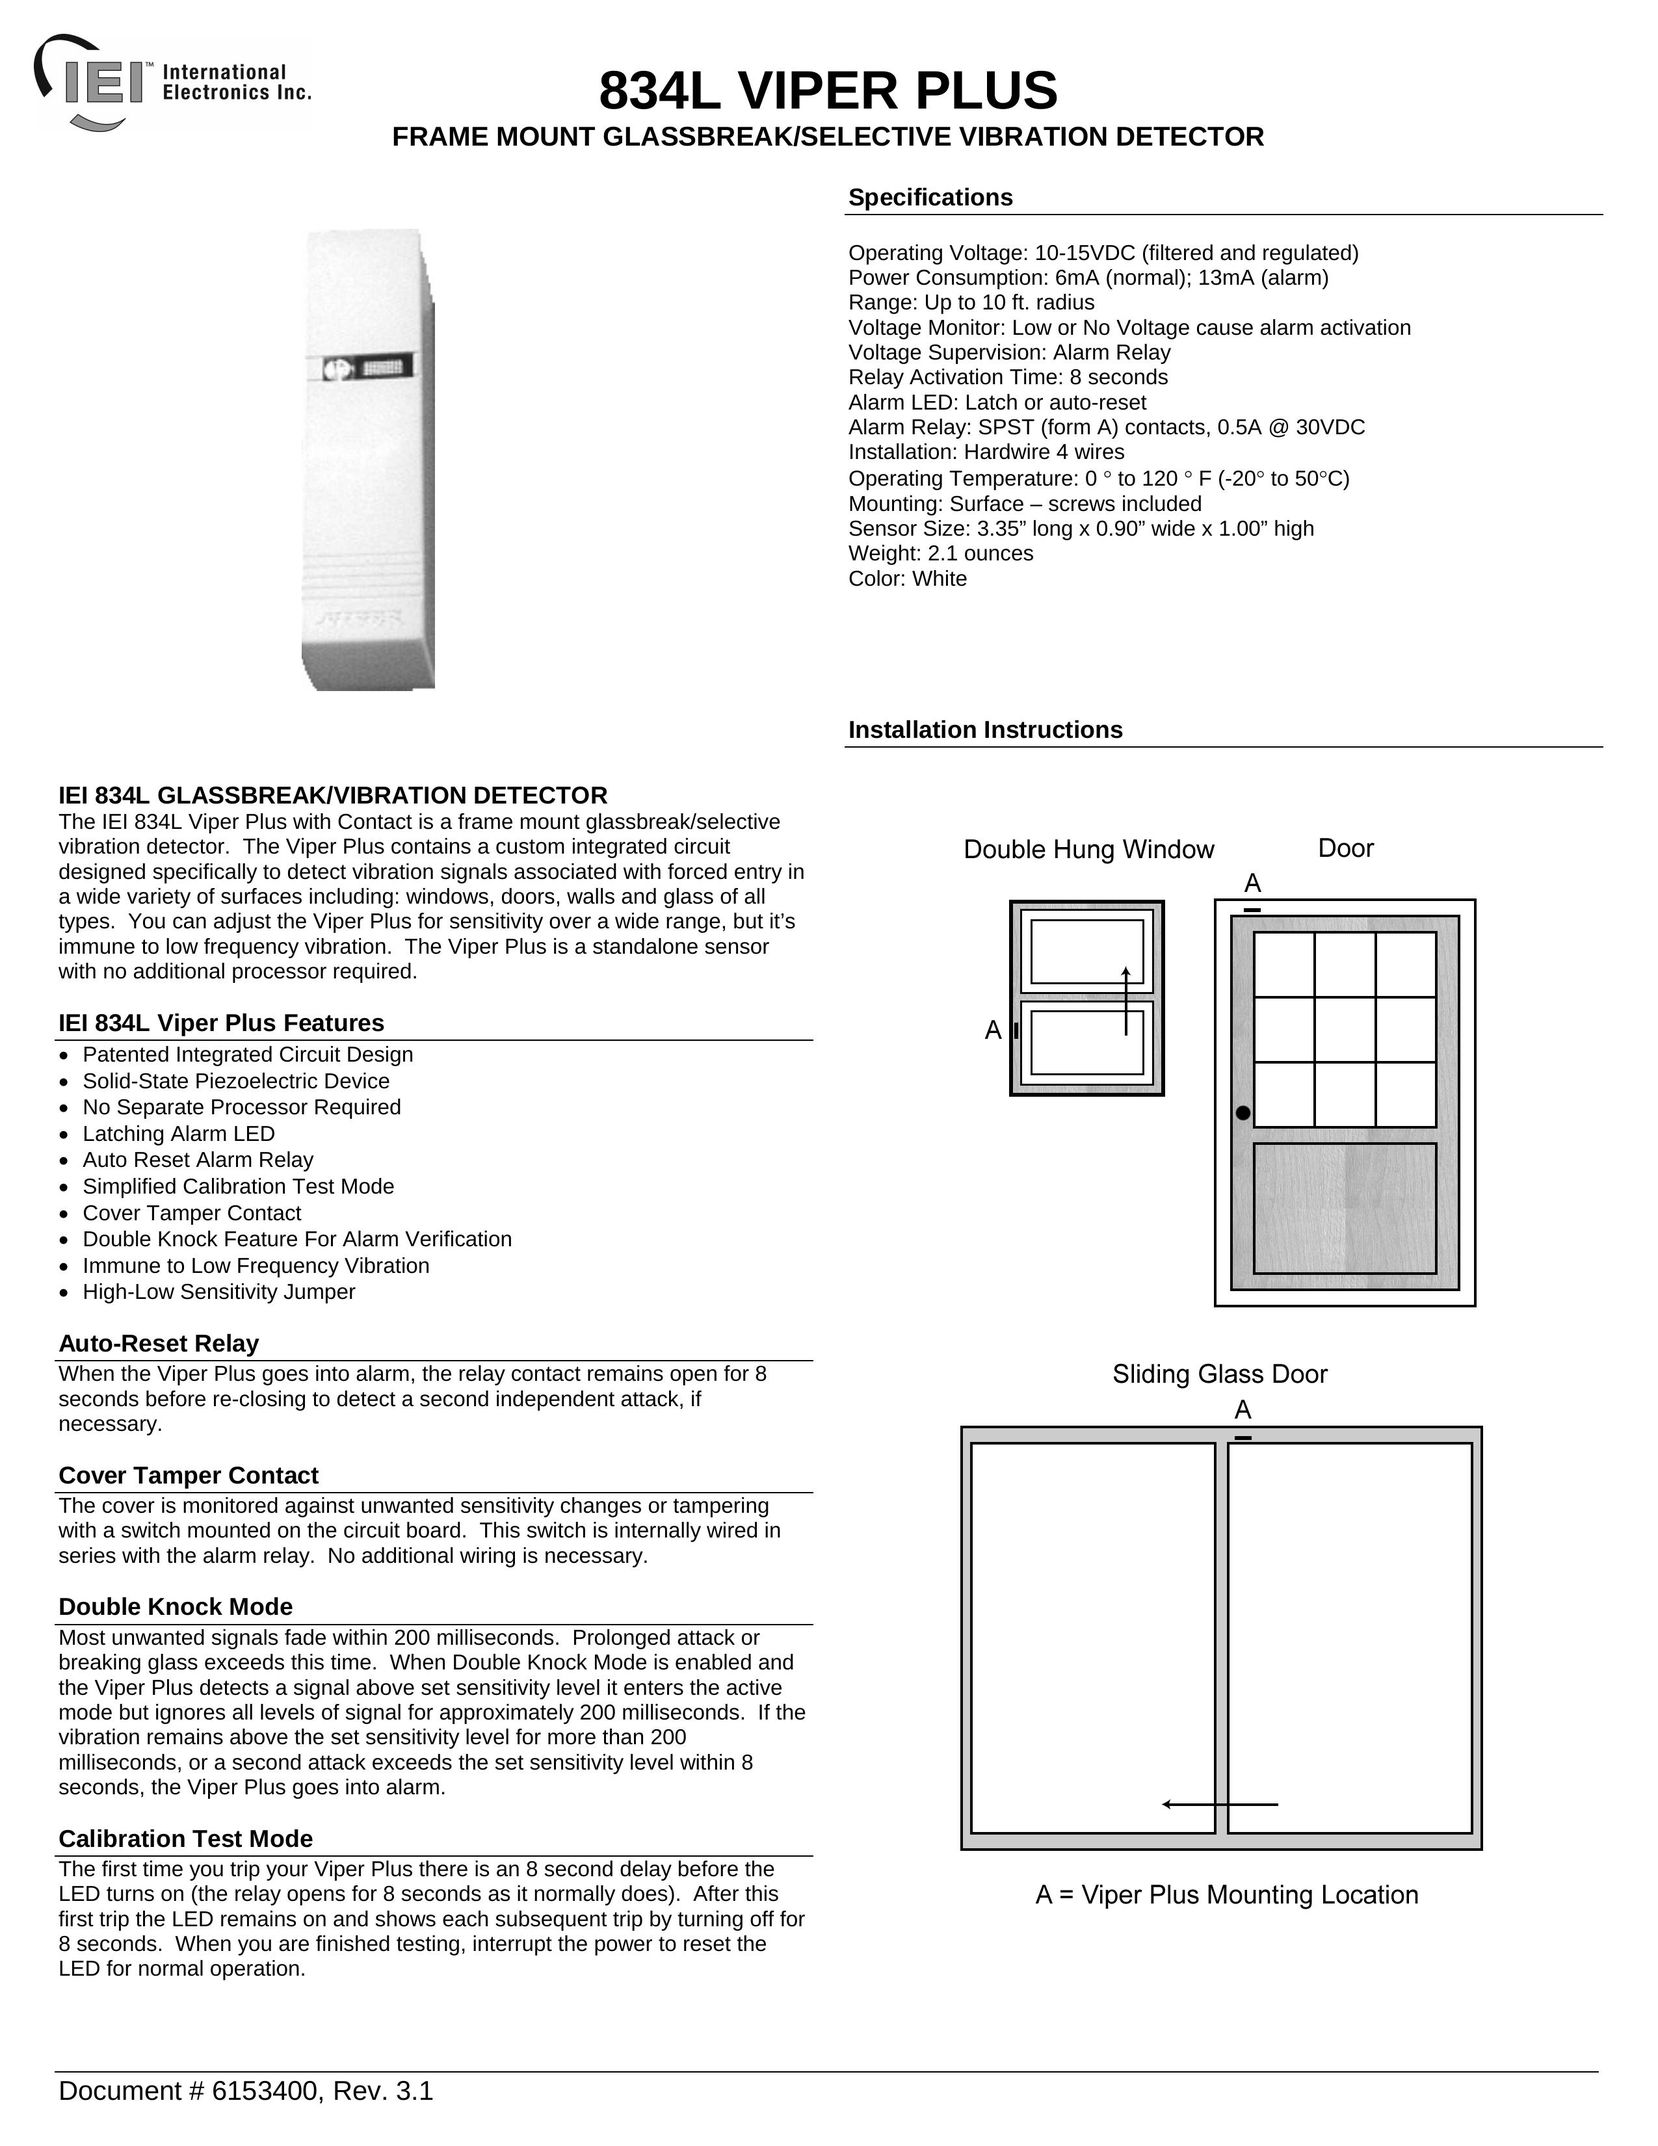 American International Electric IEI 834L Stud Sensor User Manual